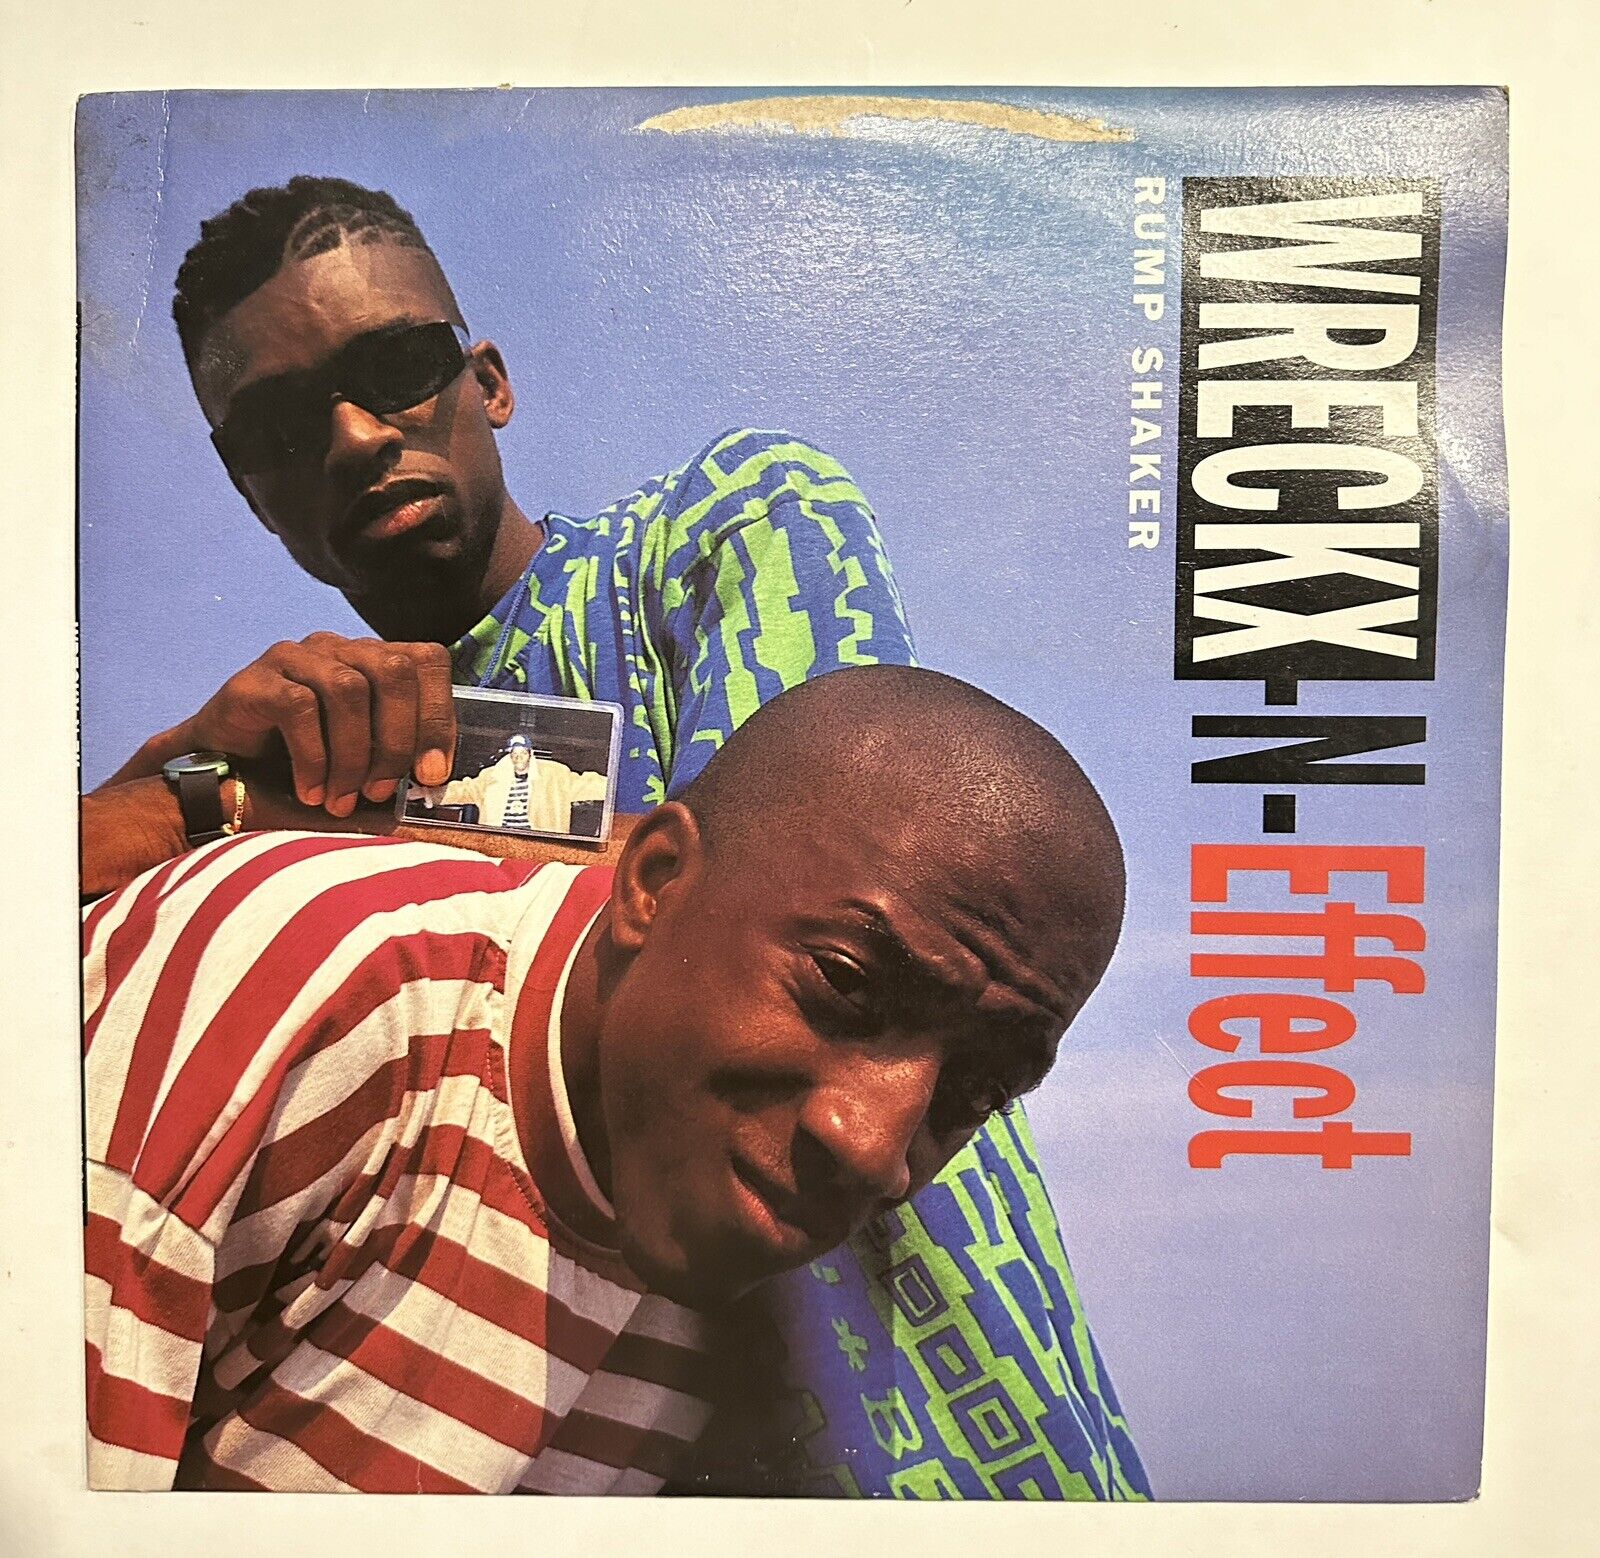 Wreckx-N-Effect - Rump Shaker - 1982 MCA Records 12” Hip Hop Single Vinyl Record